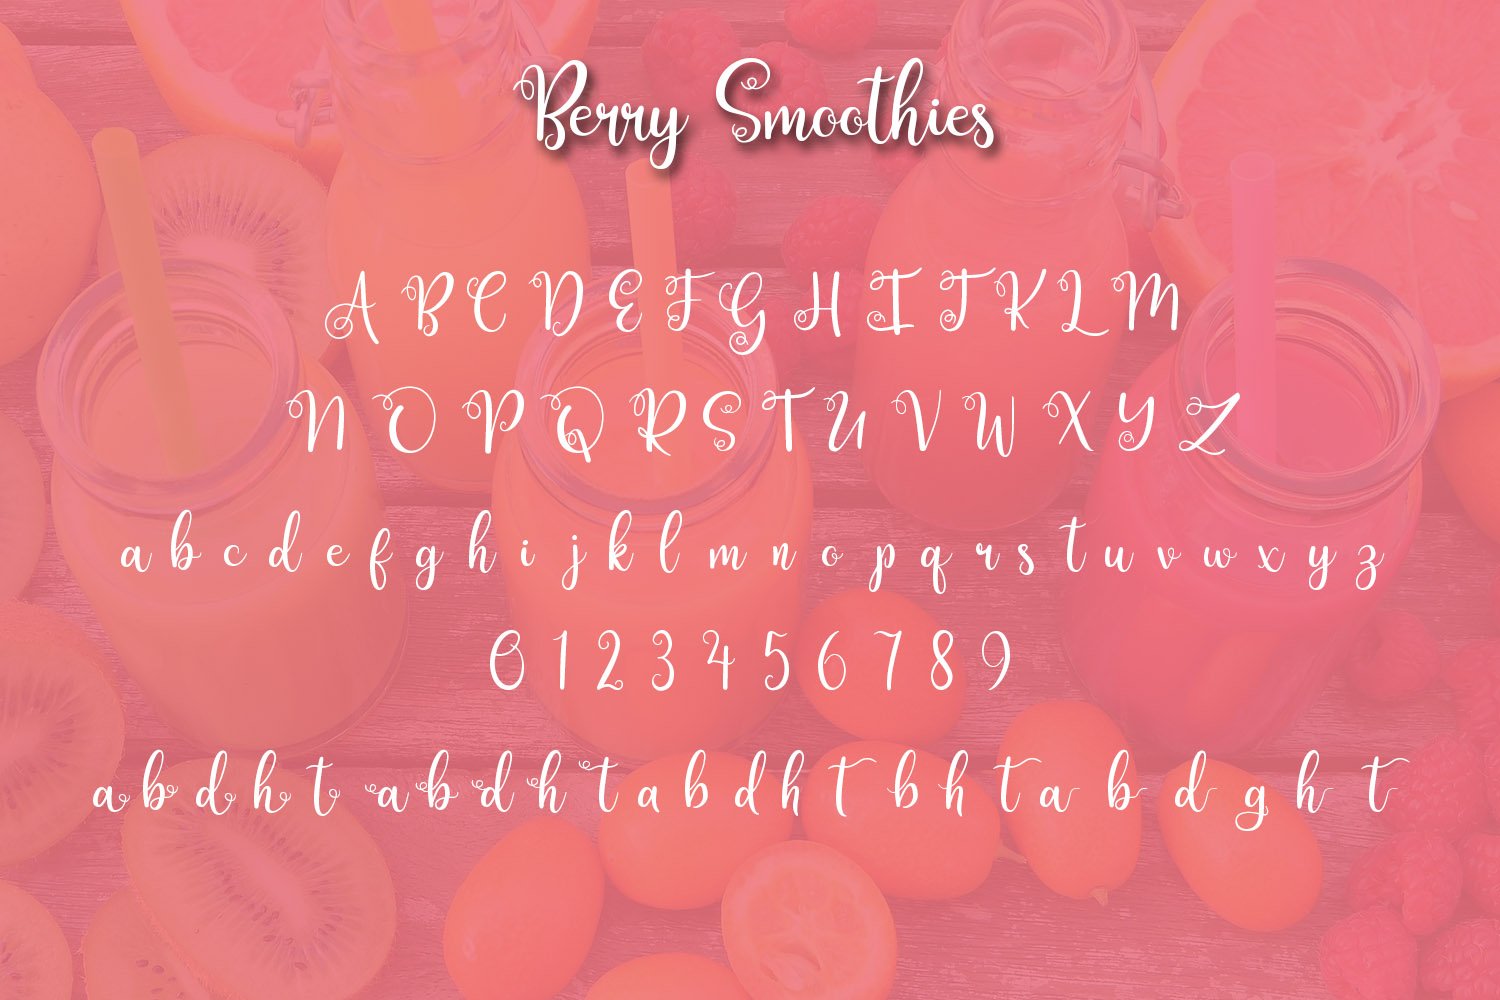 berry smoothies 2 698